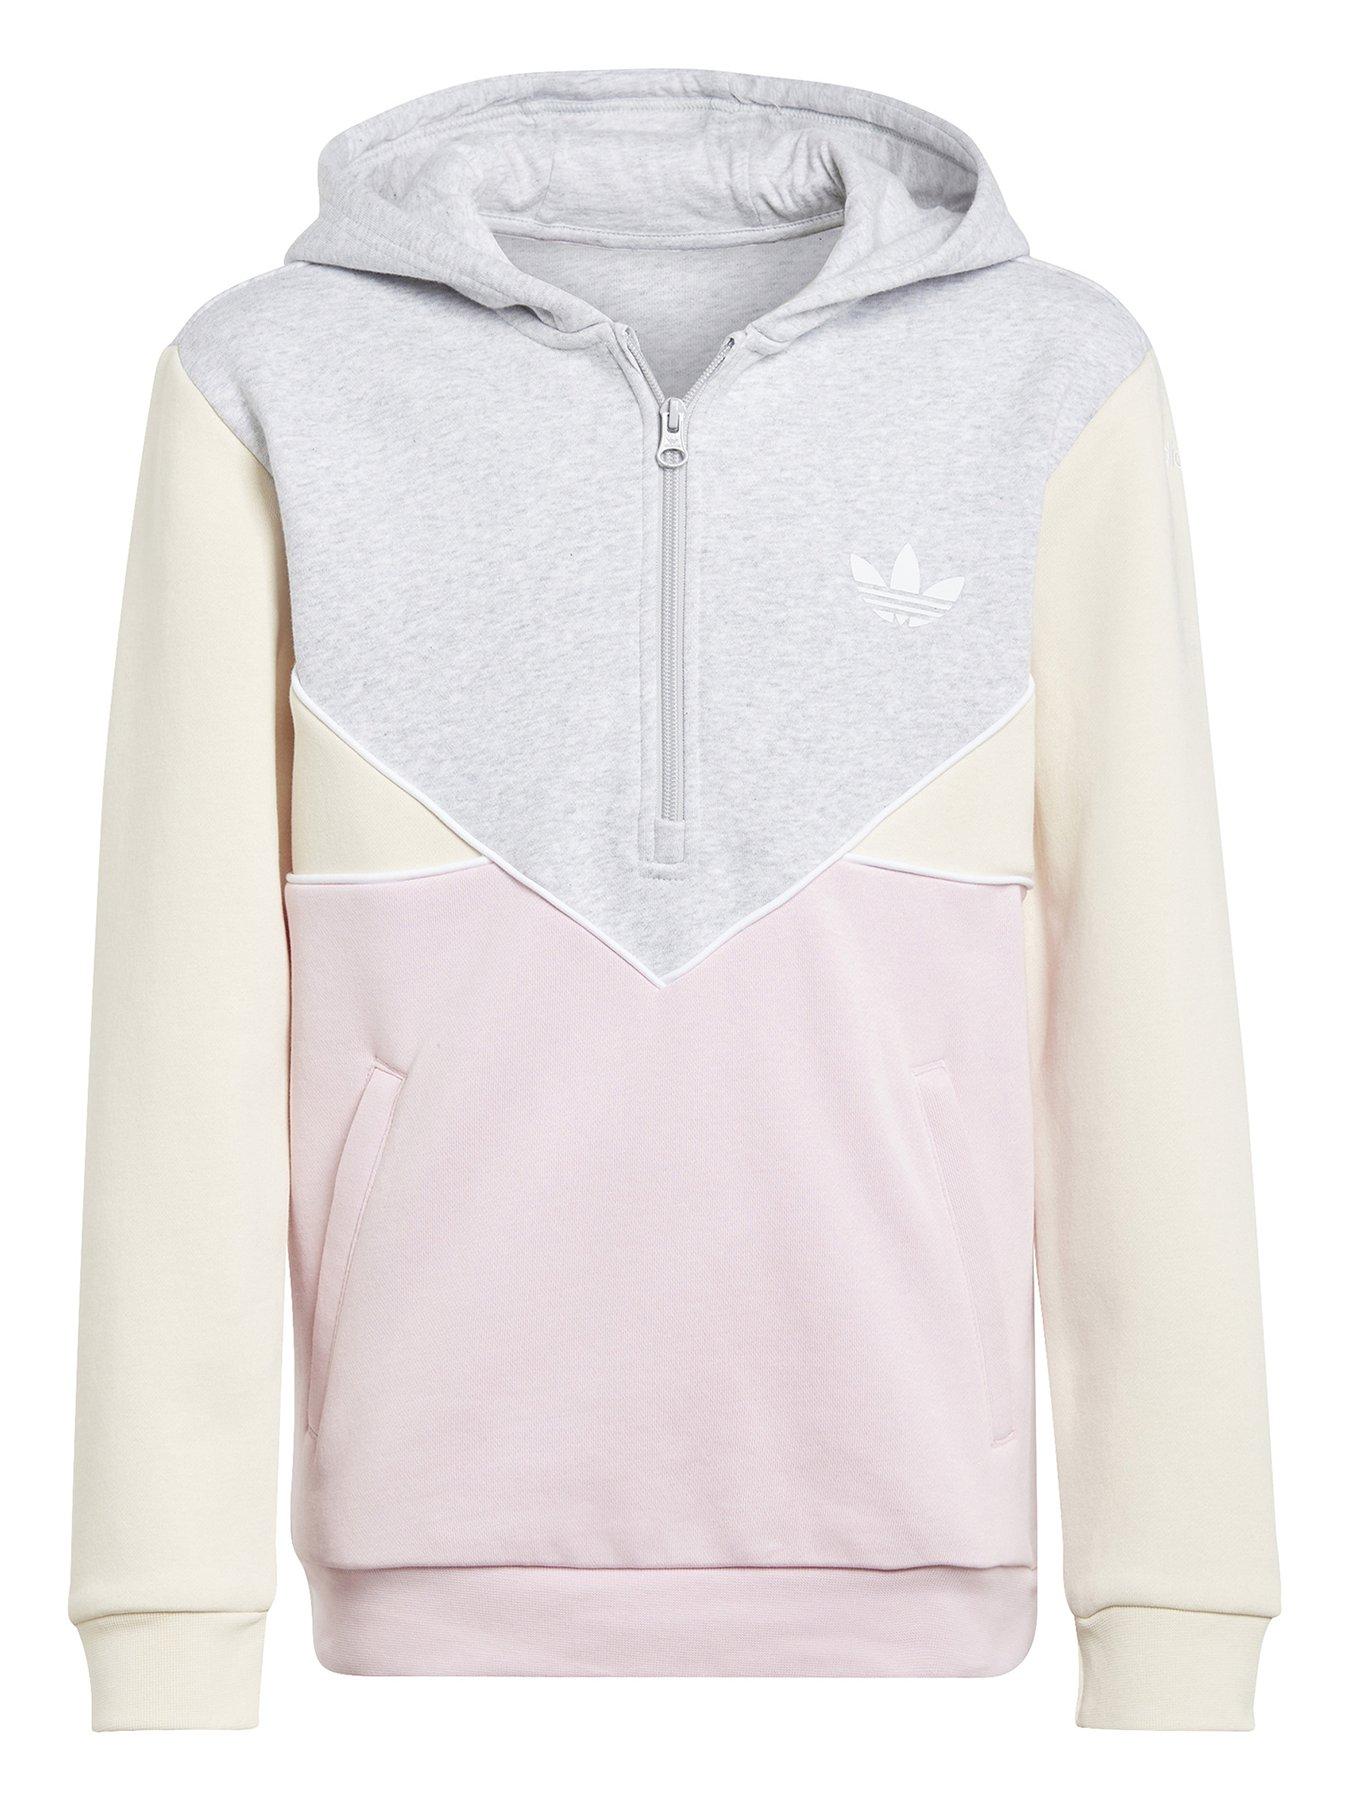 | Child sweatshirts Adidas Ireland & | | baby & Hoodies Pink | Very Sportswear |